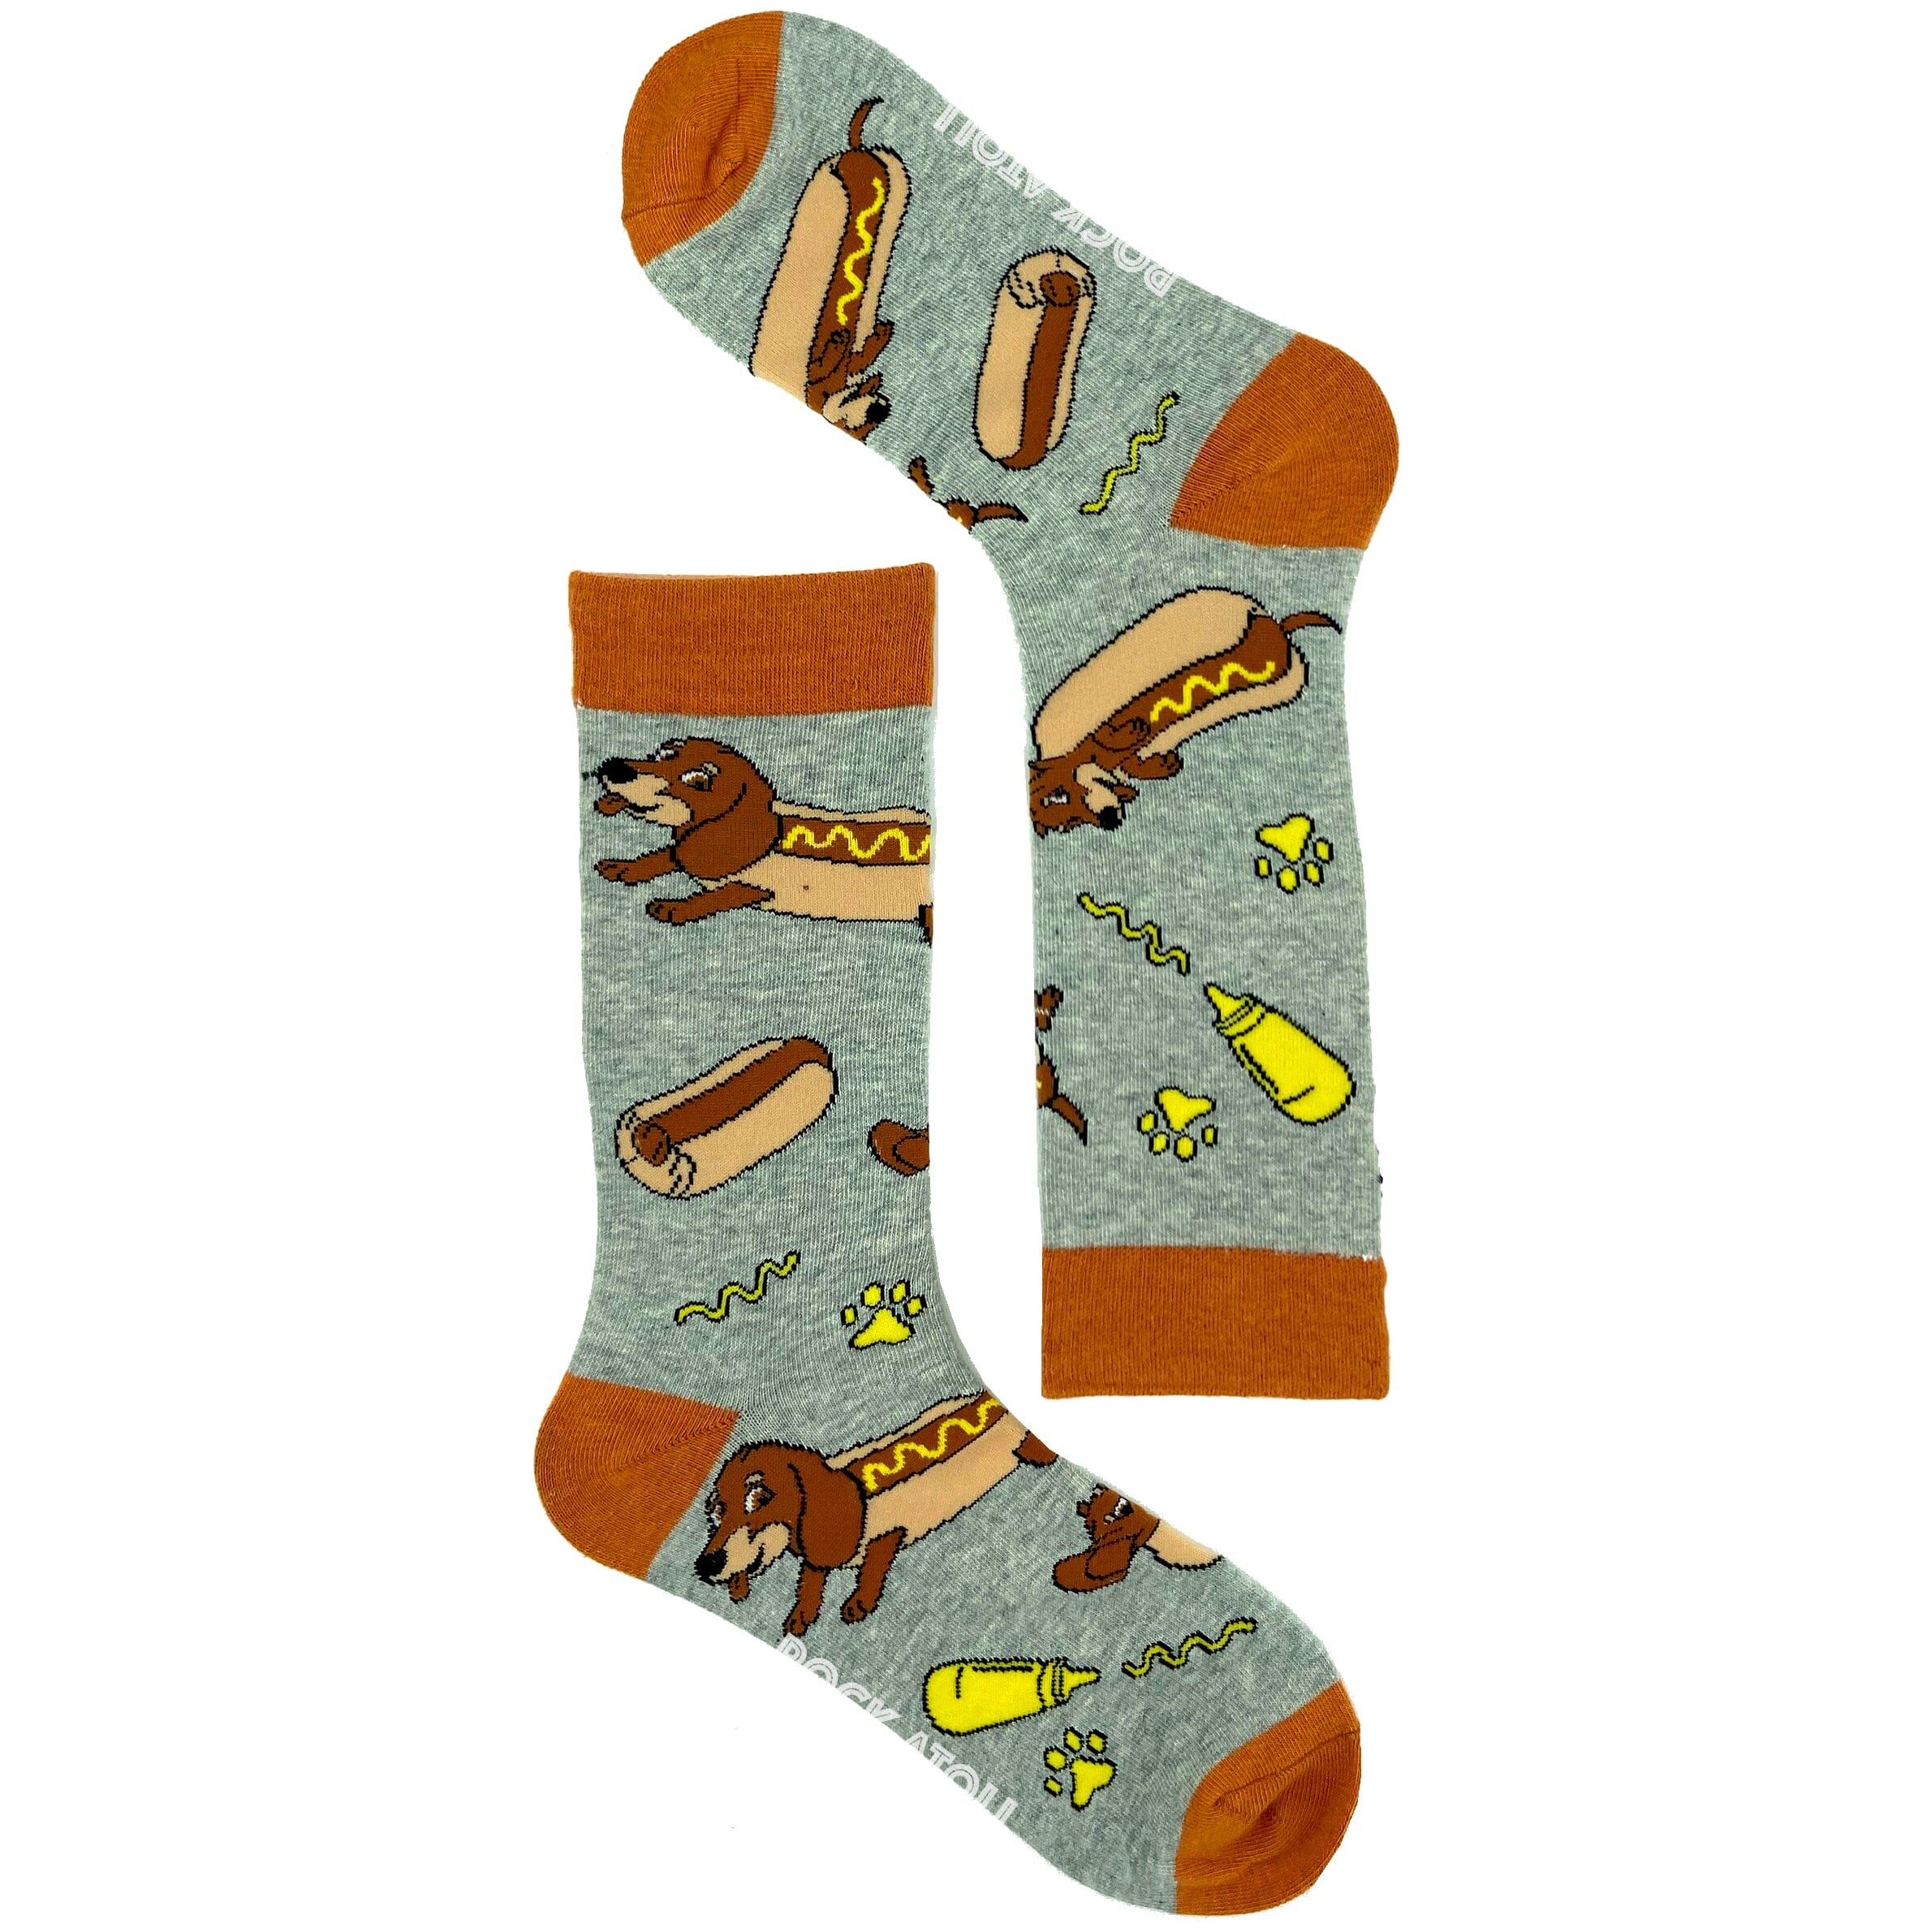 Unisex Dog Lovers Dachshund Weiner Hot Dog Patterned Novelty Socks